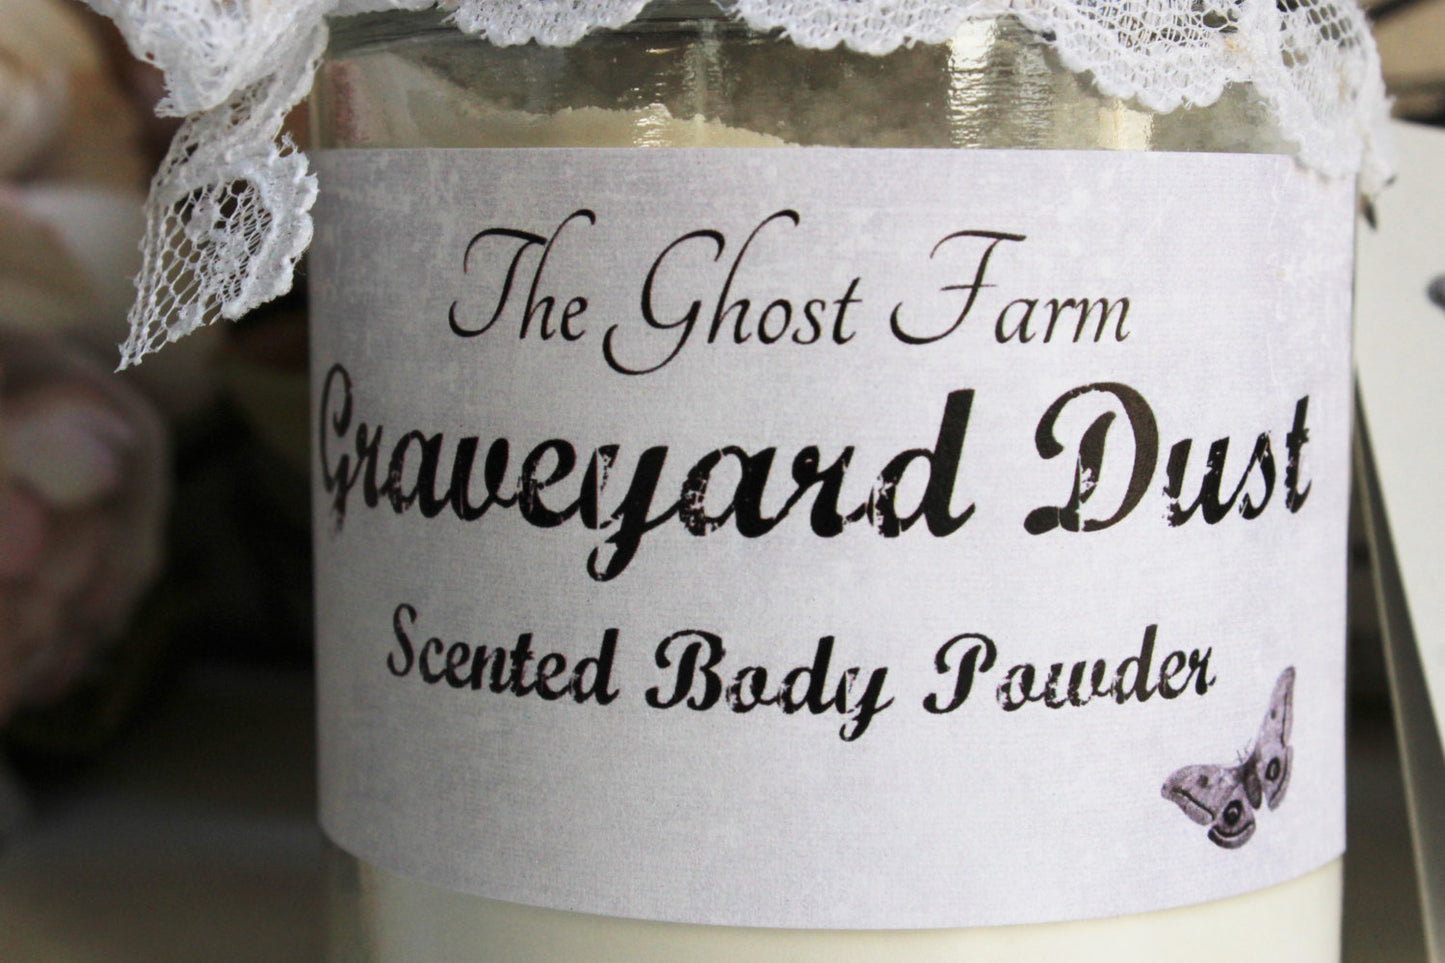 Scented Handmade Talc Free Body Powder, "Graveyard Dust" 